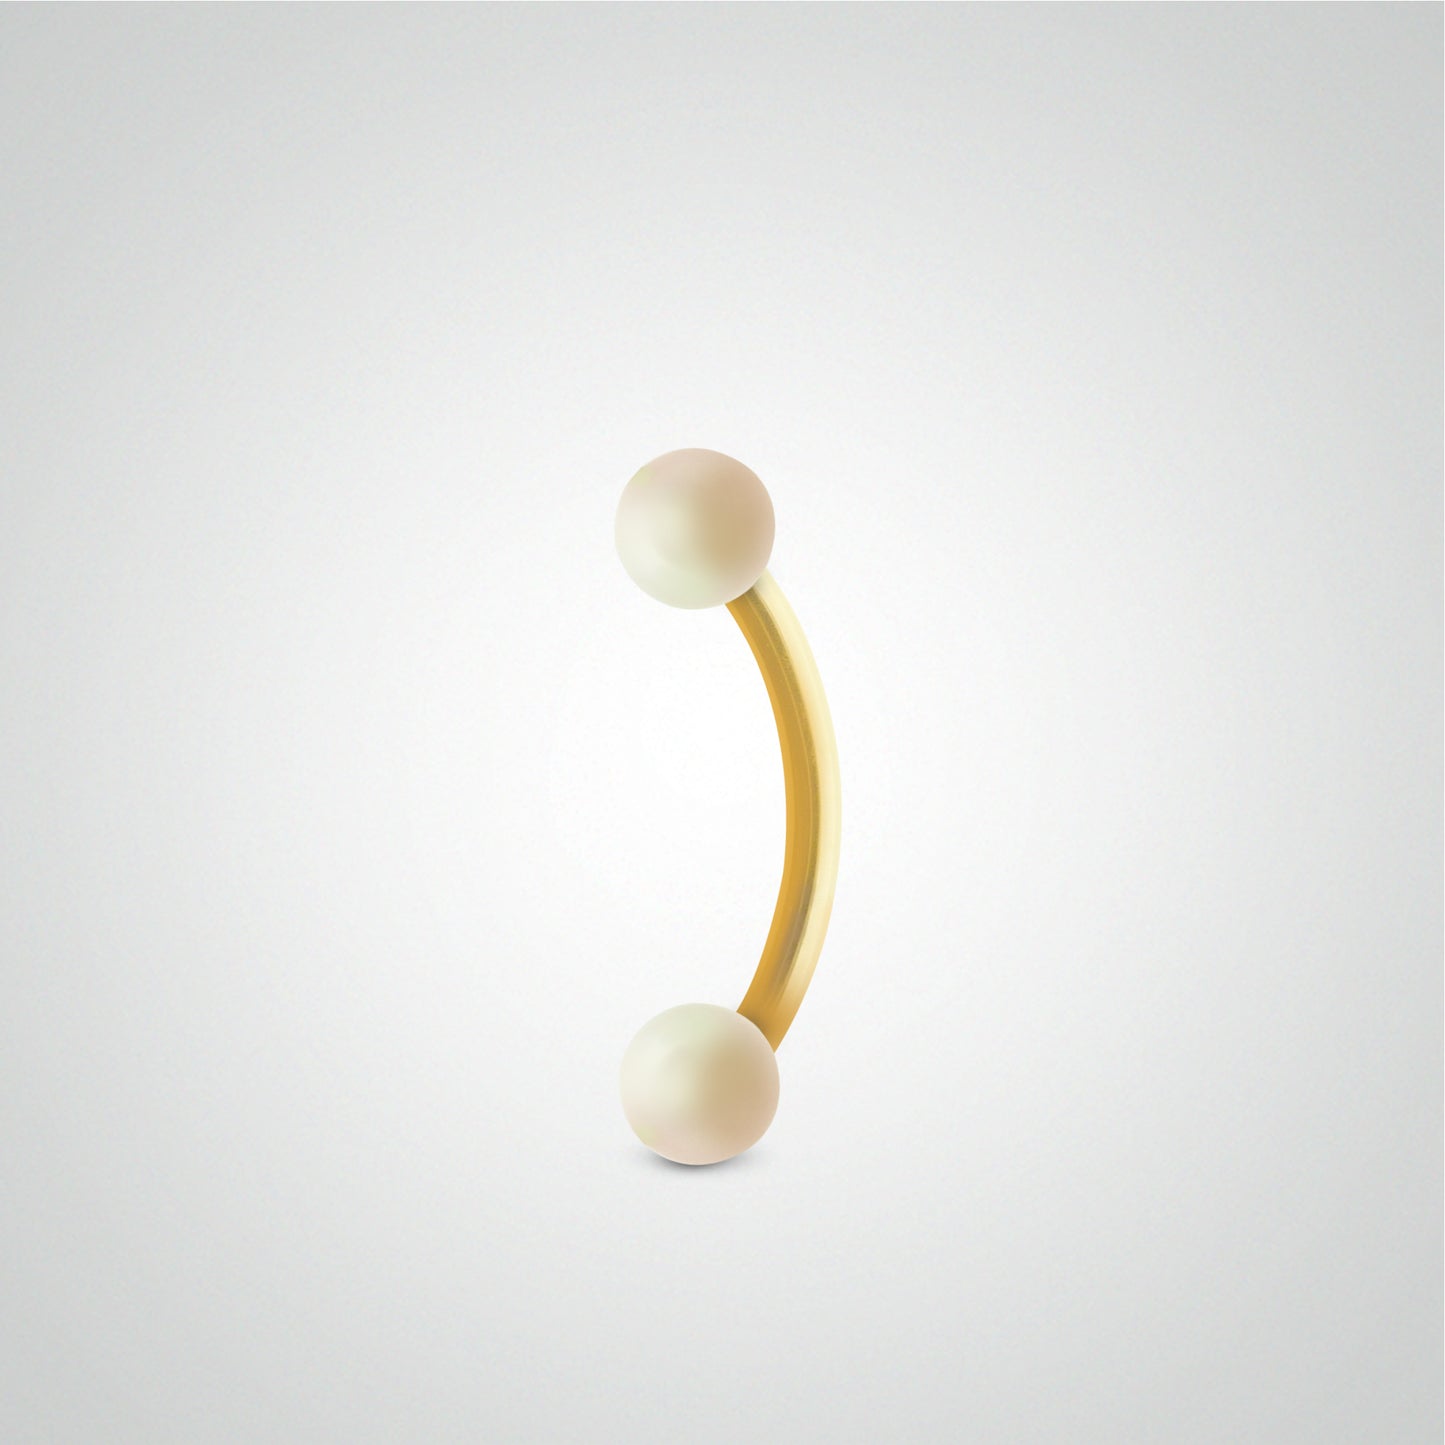 Piercing rook en or jaune avec perles de culture véritables (1,2mm)